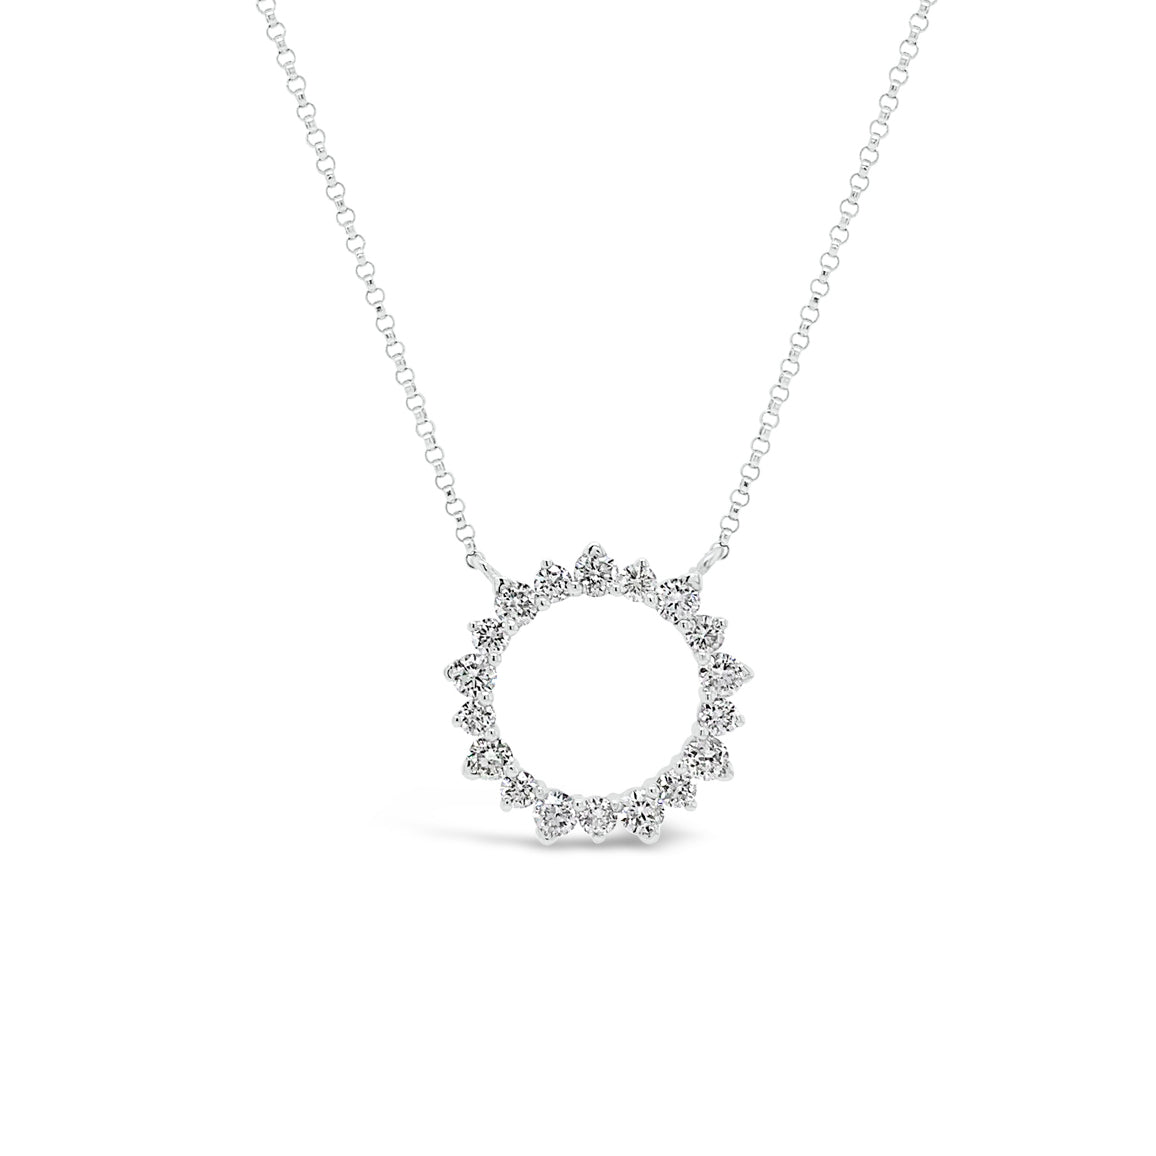 Diamond Circle of Life Pendant Necklace  - 14K gold 3.48 grams.  - 18 round diamonds totaling 0.95 carats